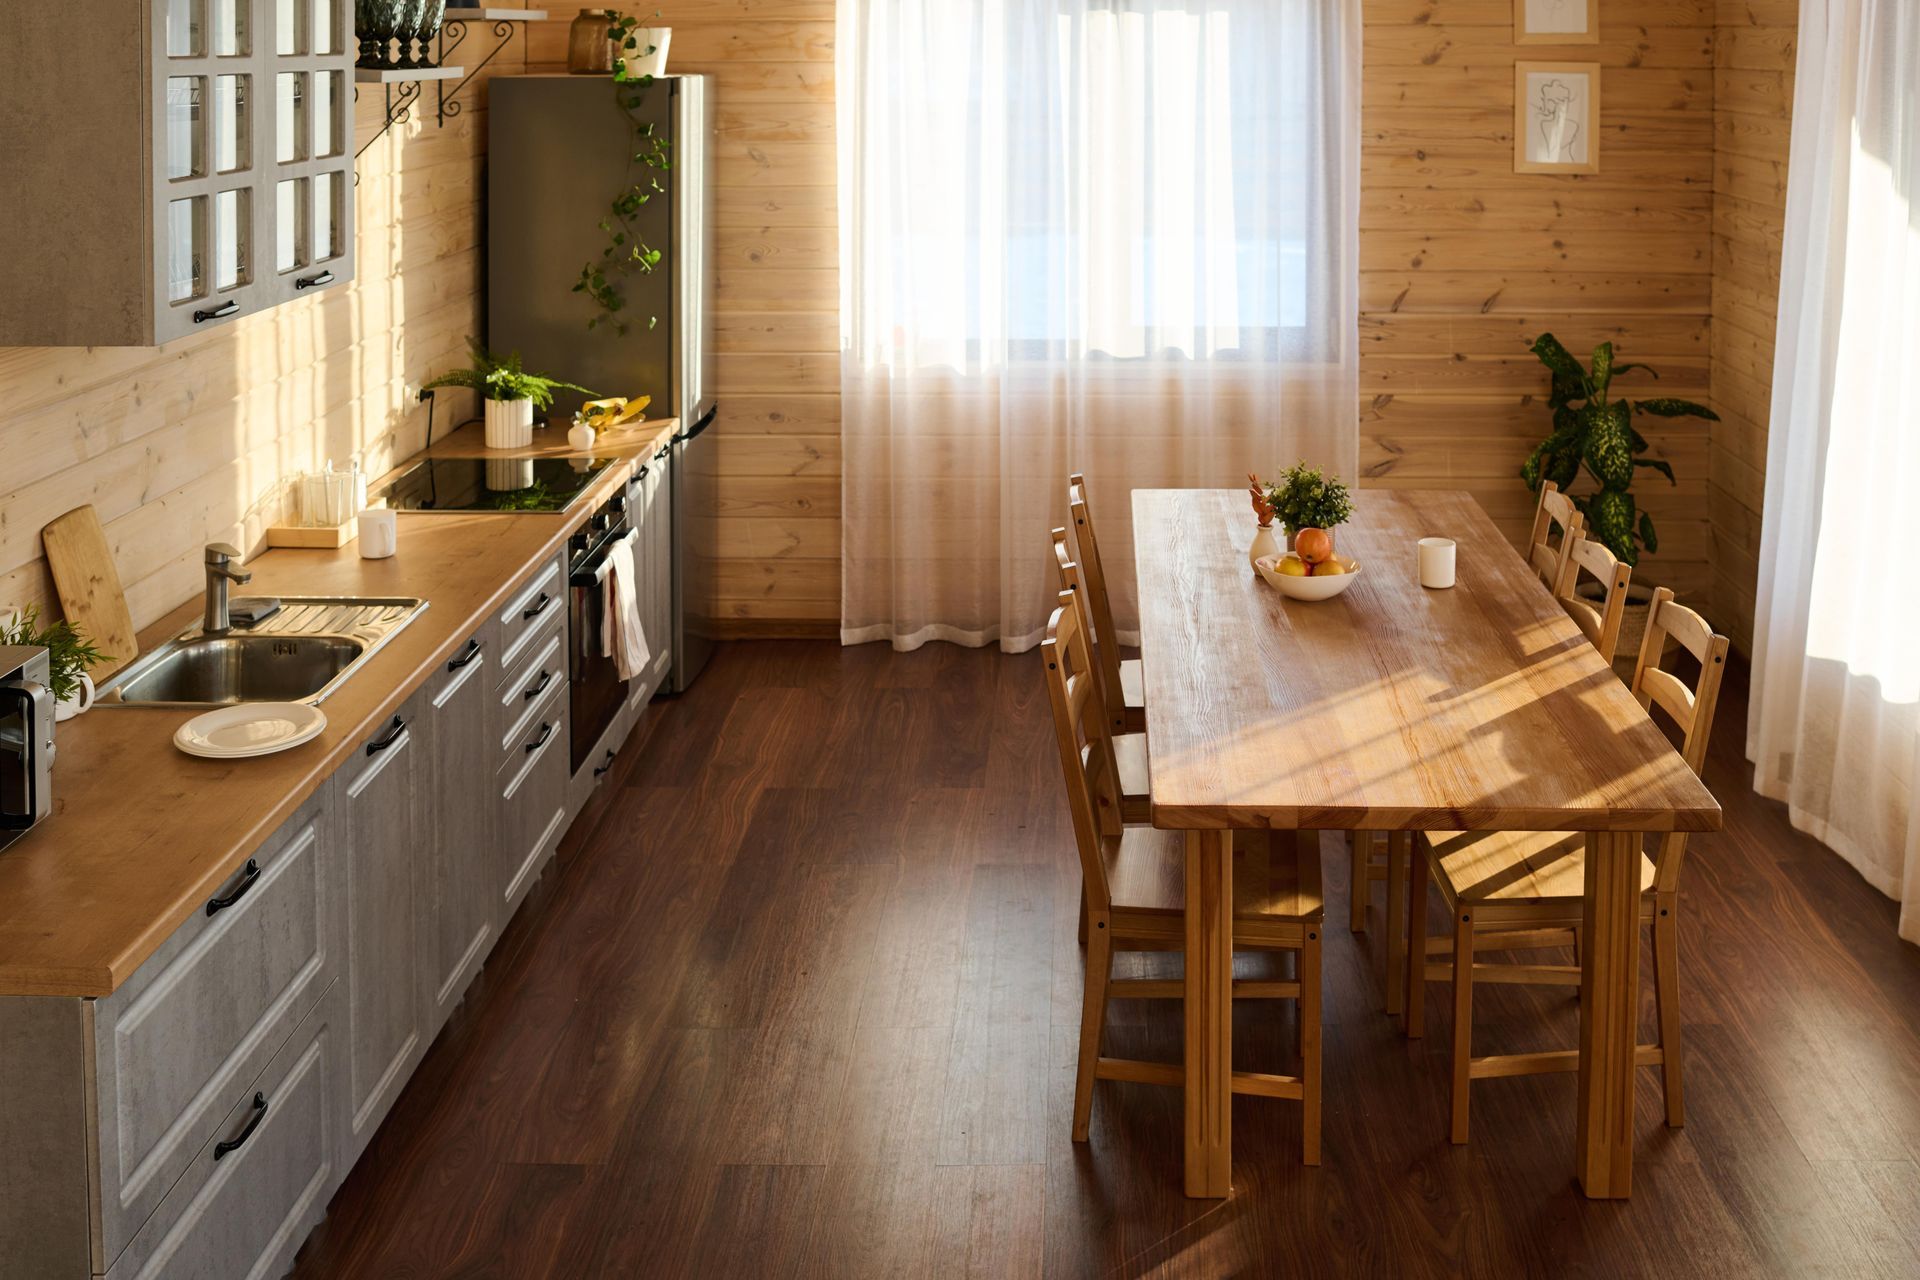 nice small kitchen